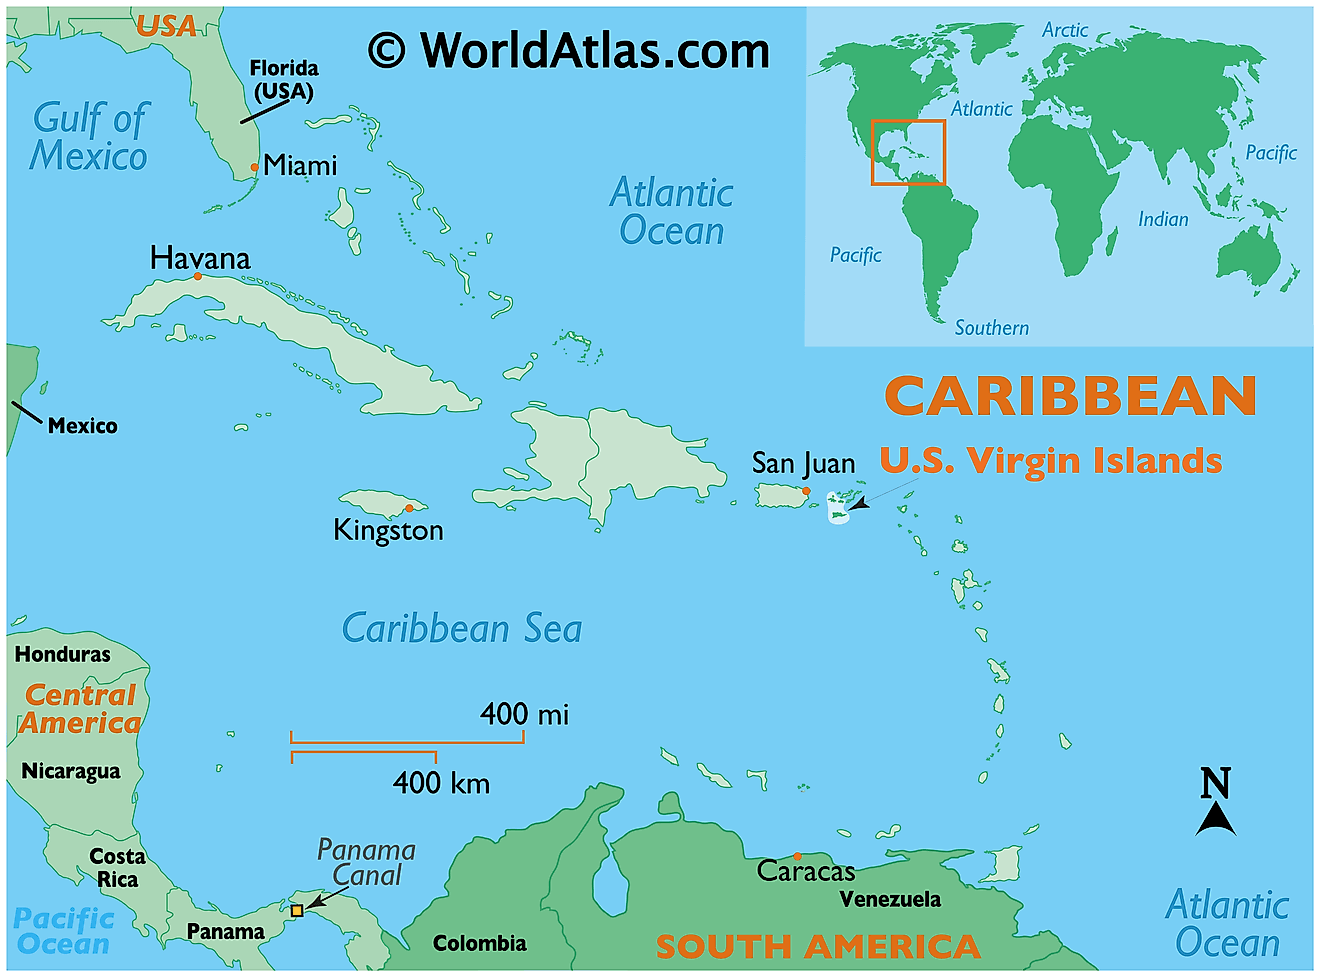 Where is US Virgin Islands?